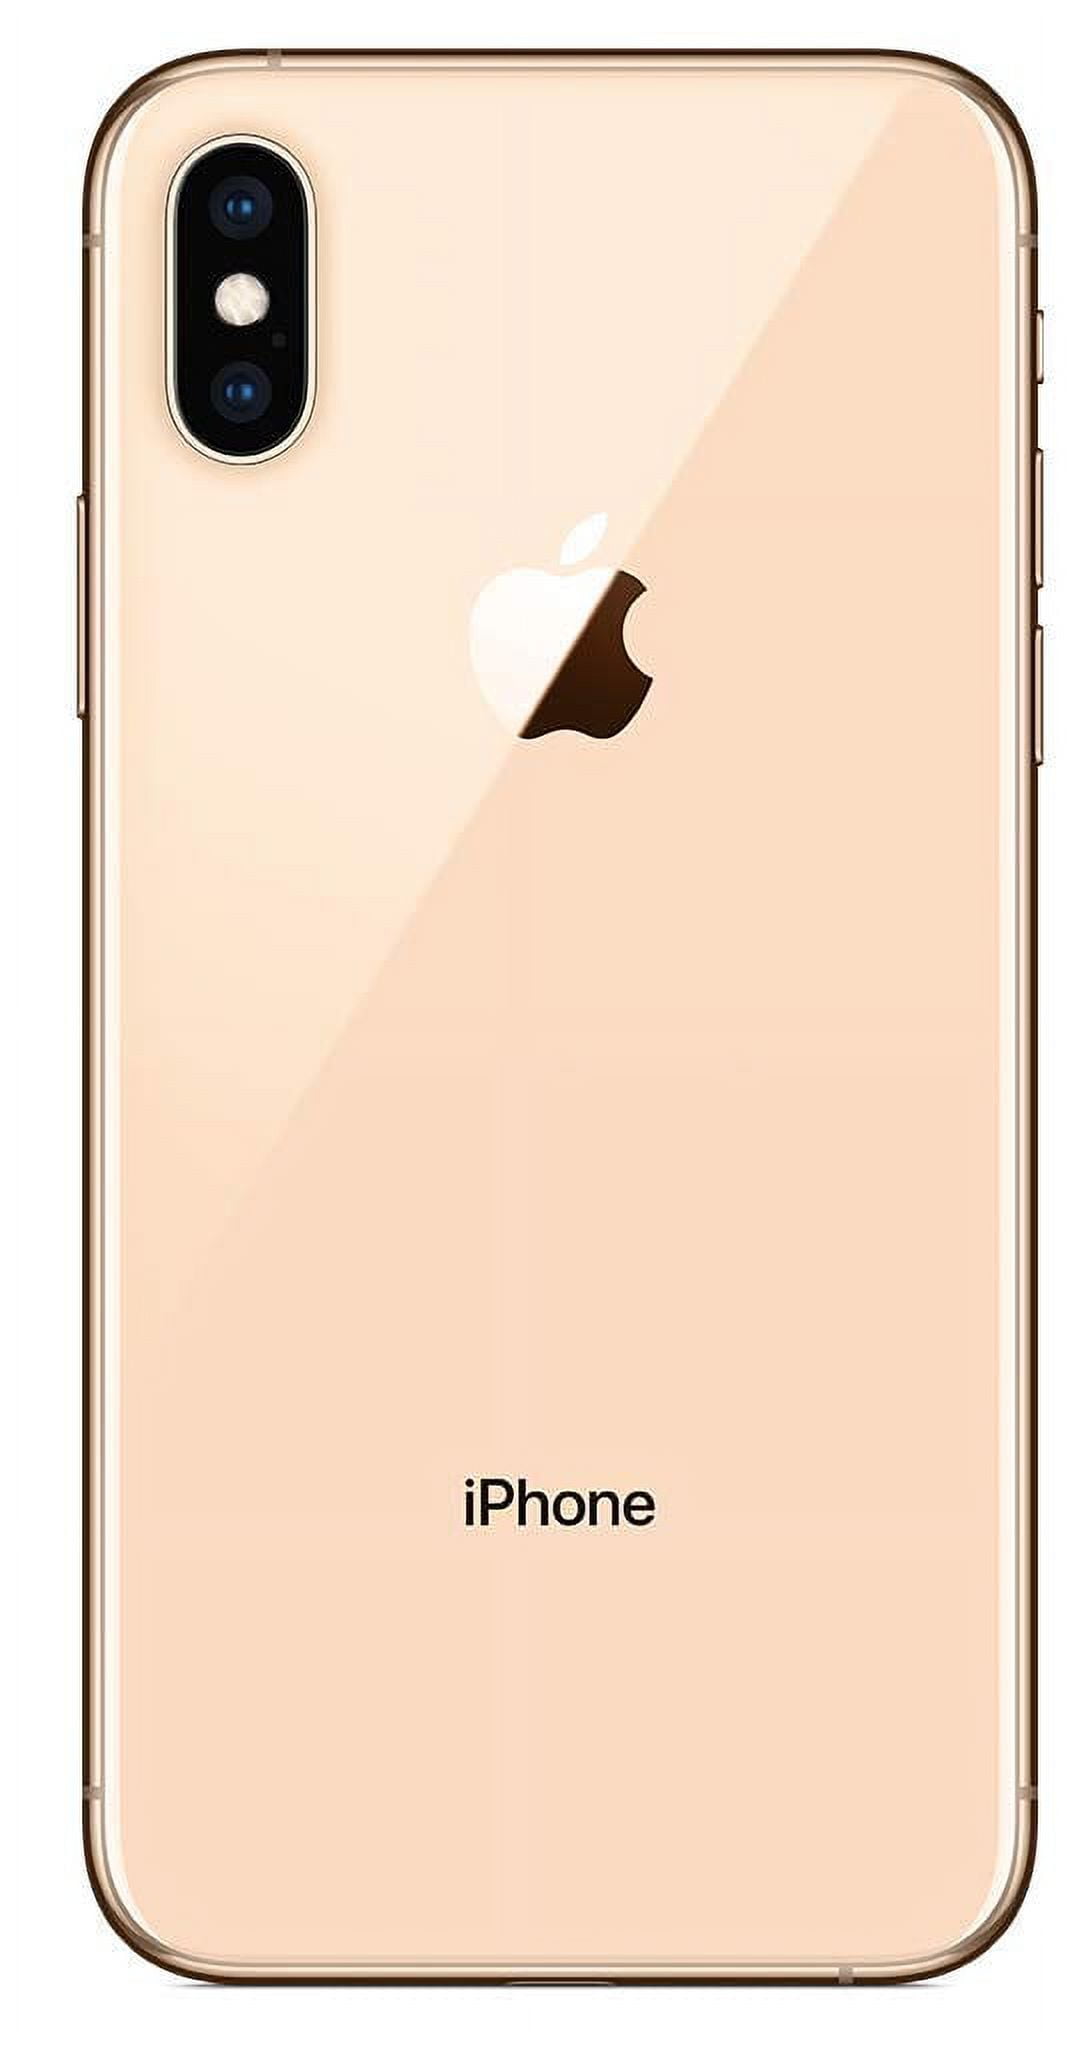 Restored Apple iPhone XS 64GB GSM Gold Unlocked Smartphone (Refurbished)